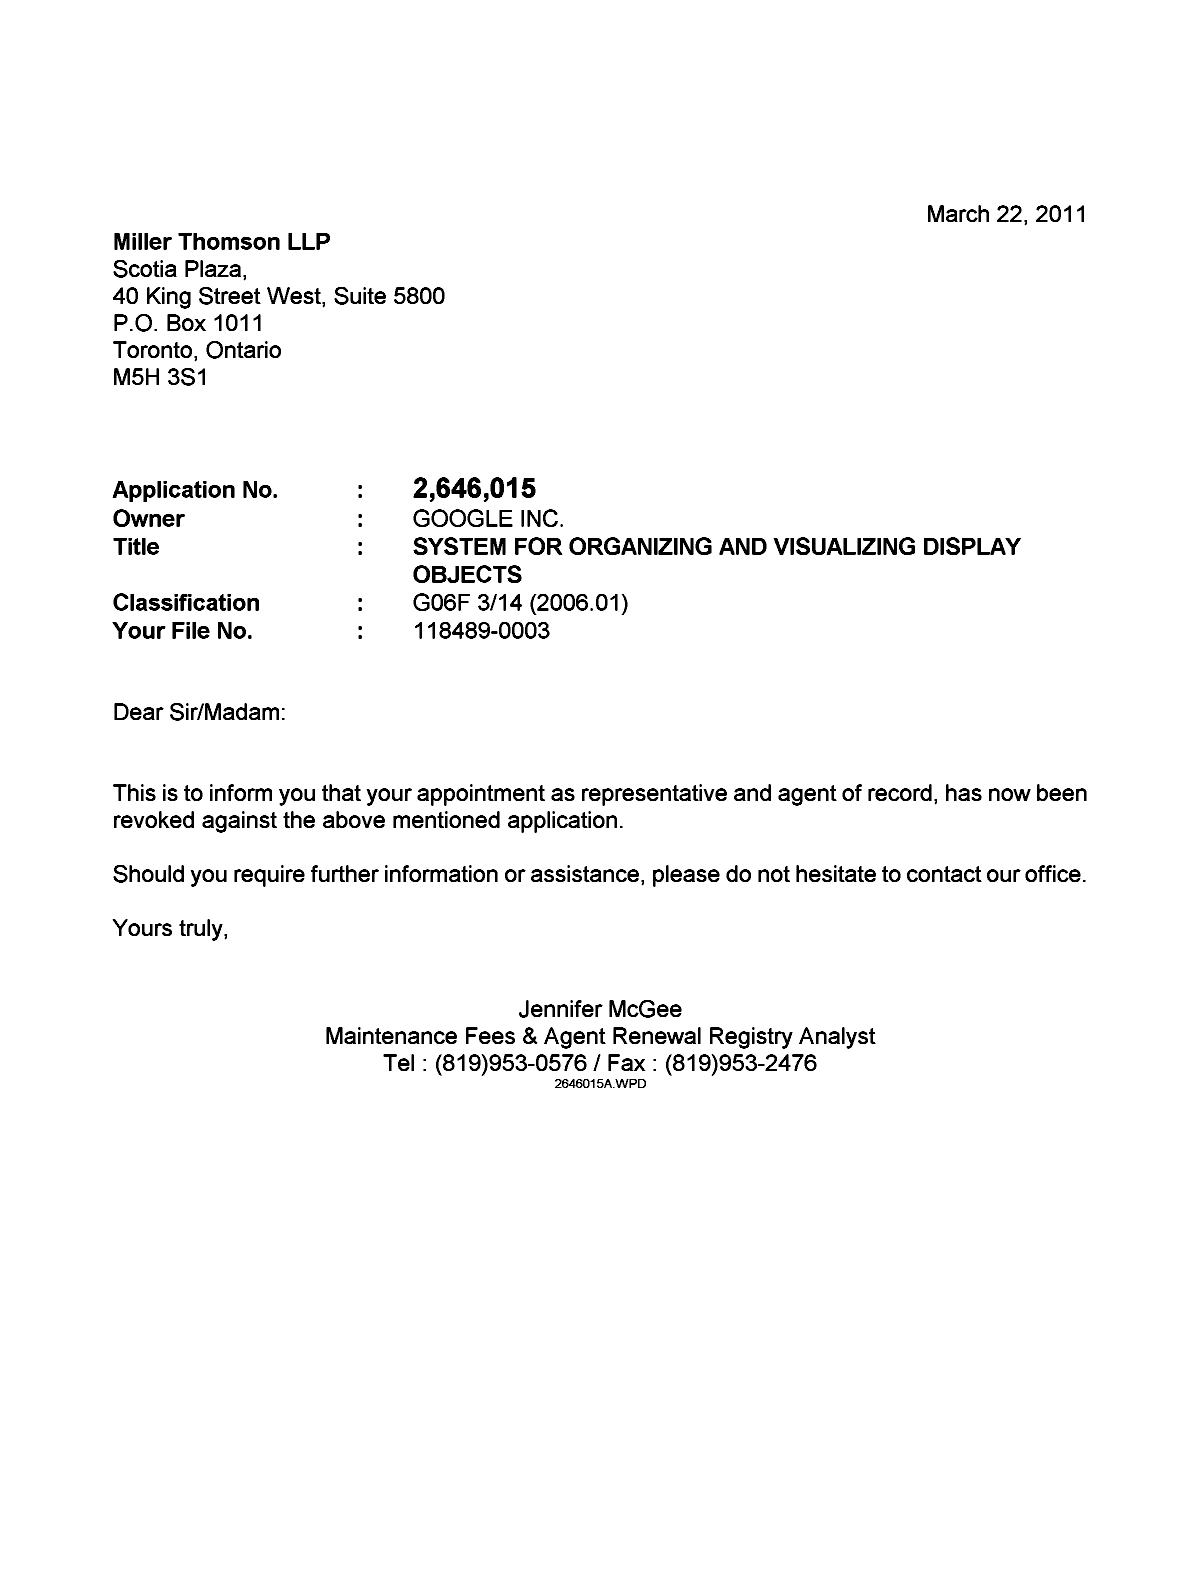 Canadian Patent Document 2646015. Correspondence 20110322. Image 1 of 1